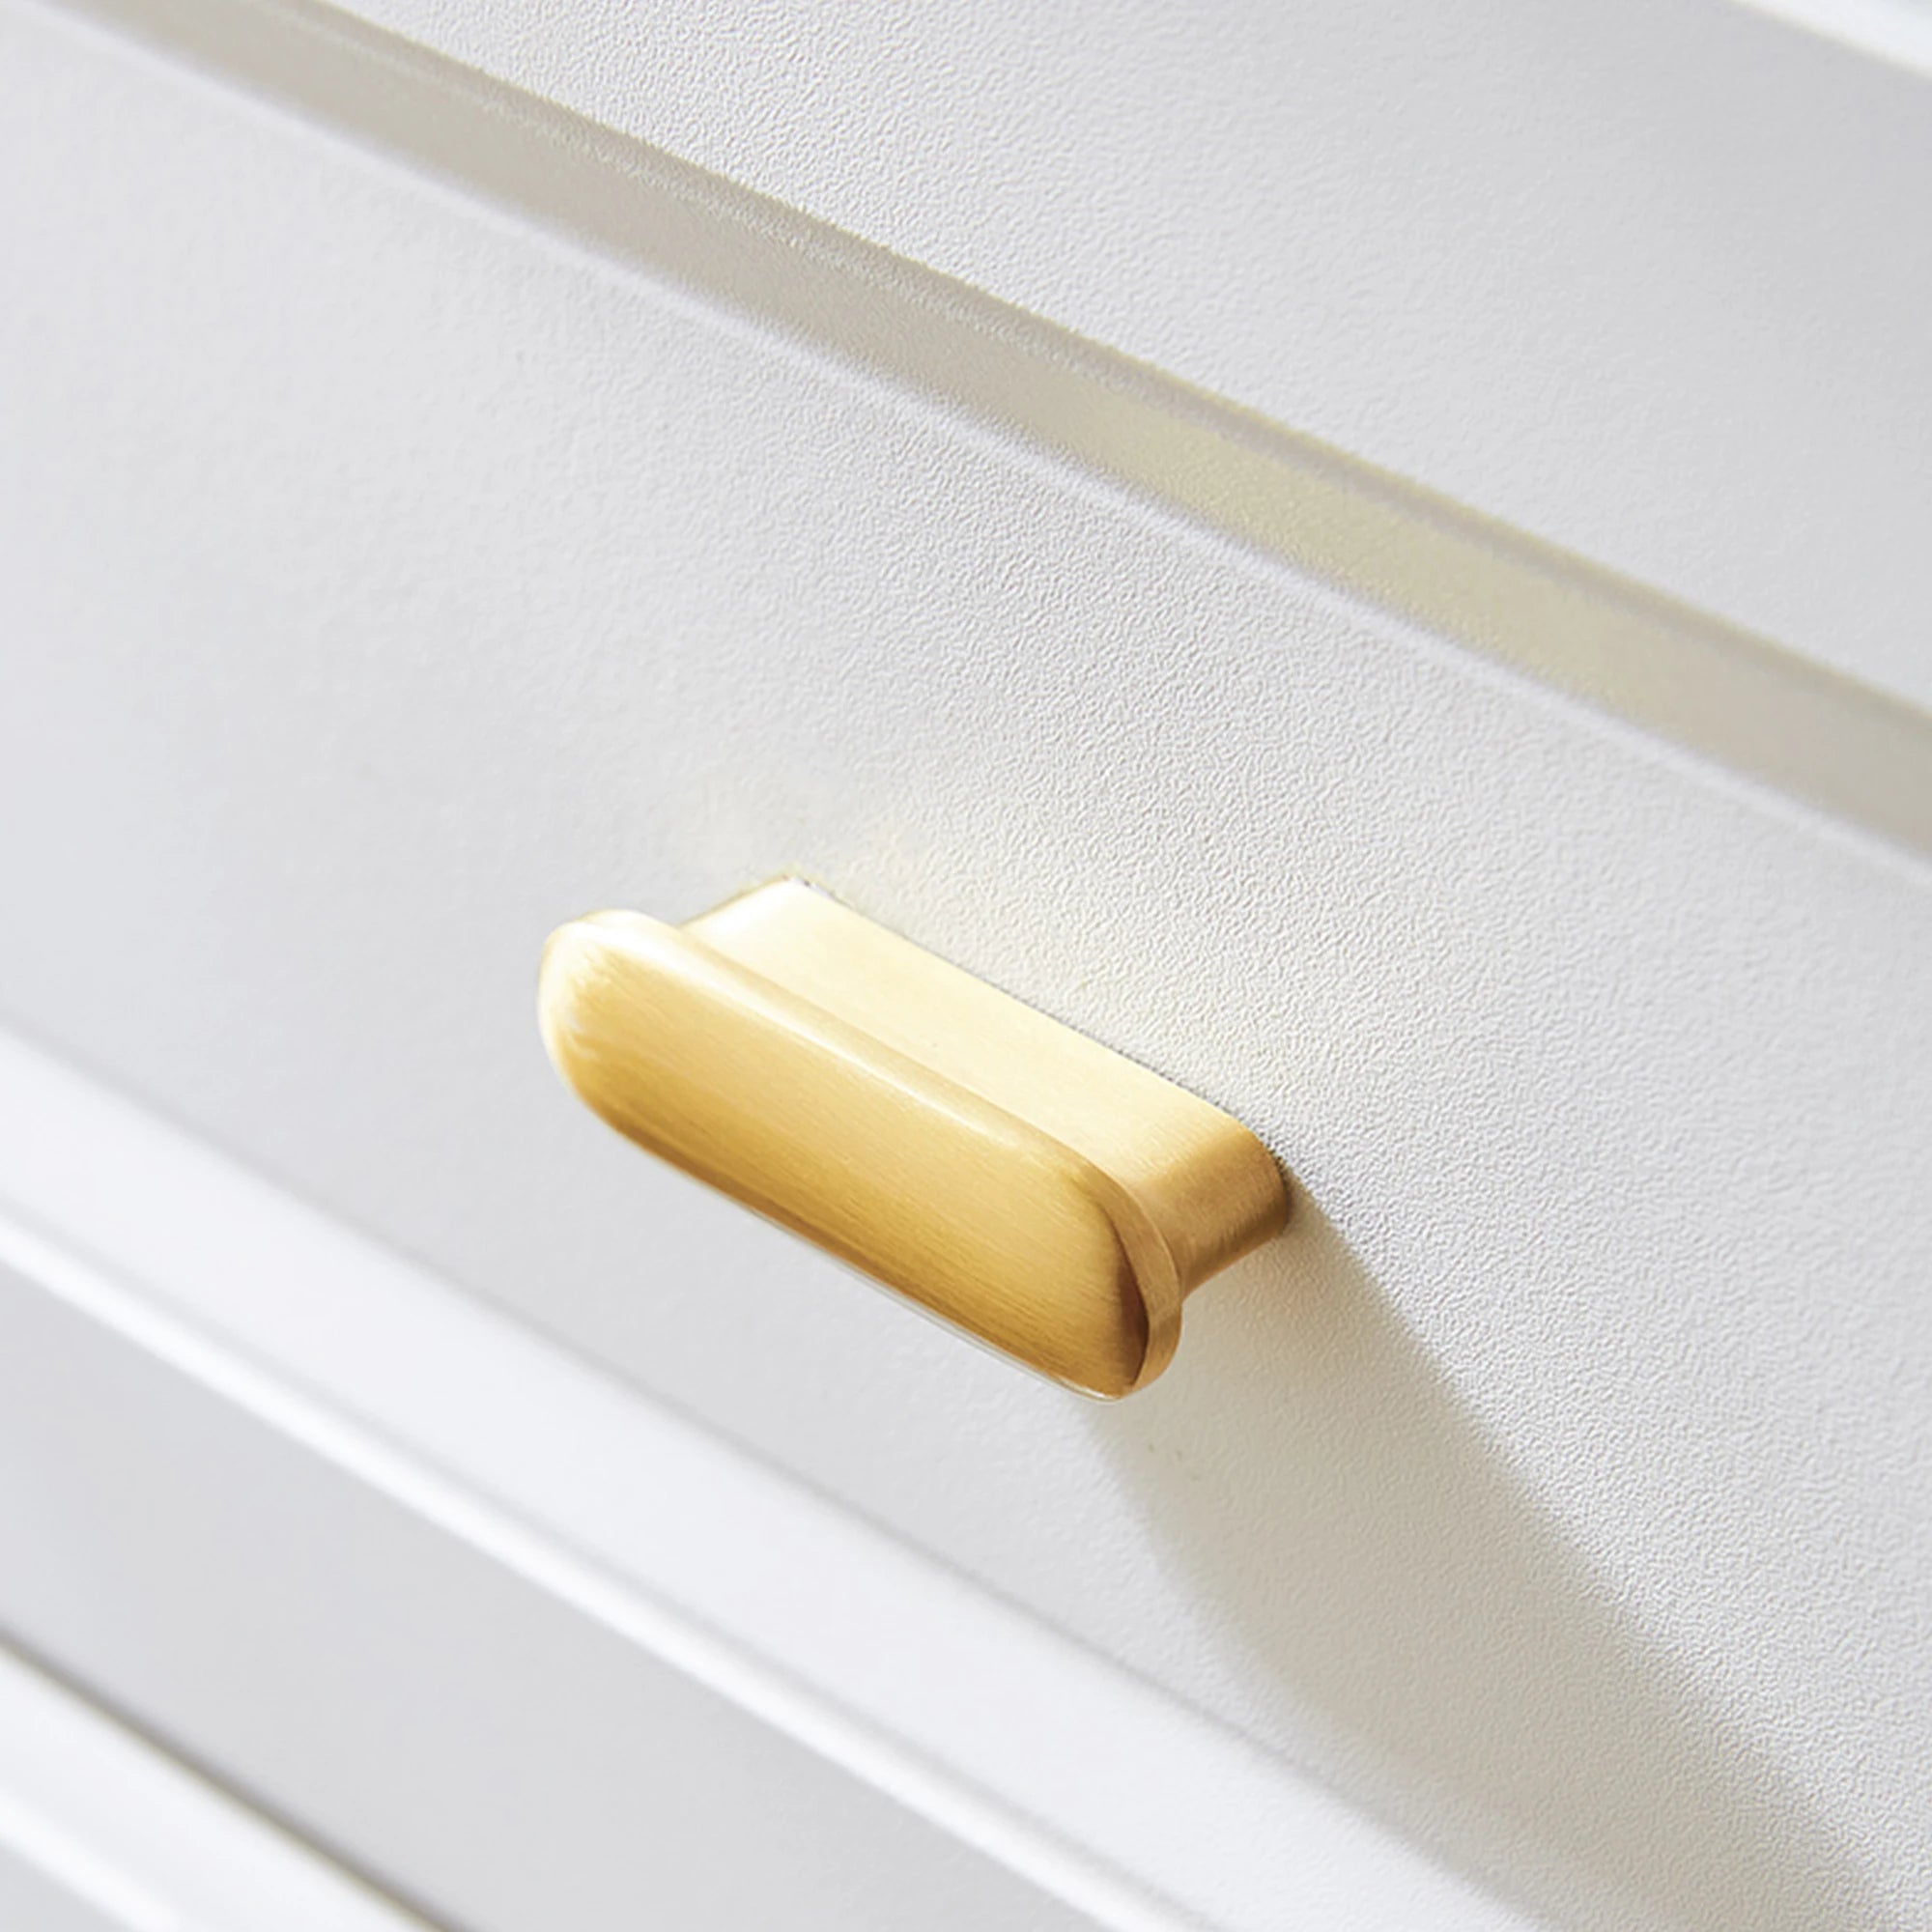 MFYS 32/64mm Hole centers Cabinet Drawer Handles Gold Solid Brass Door Knobs Modern Luxury Furniture Hardware Kitchen Accessory